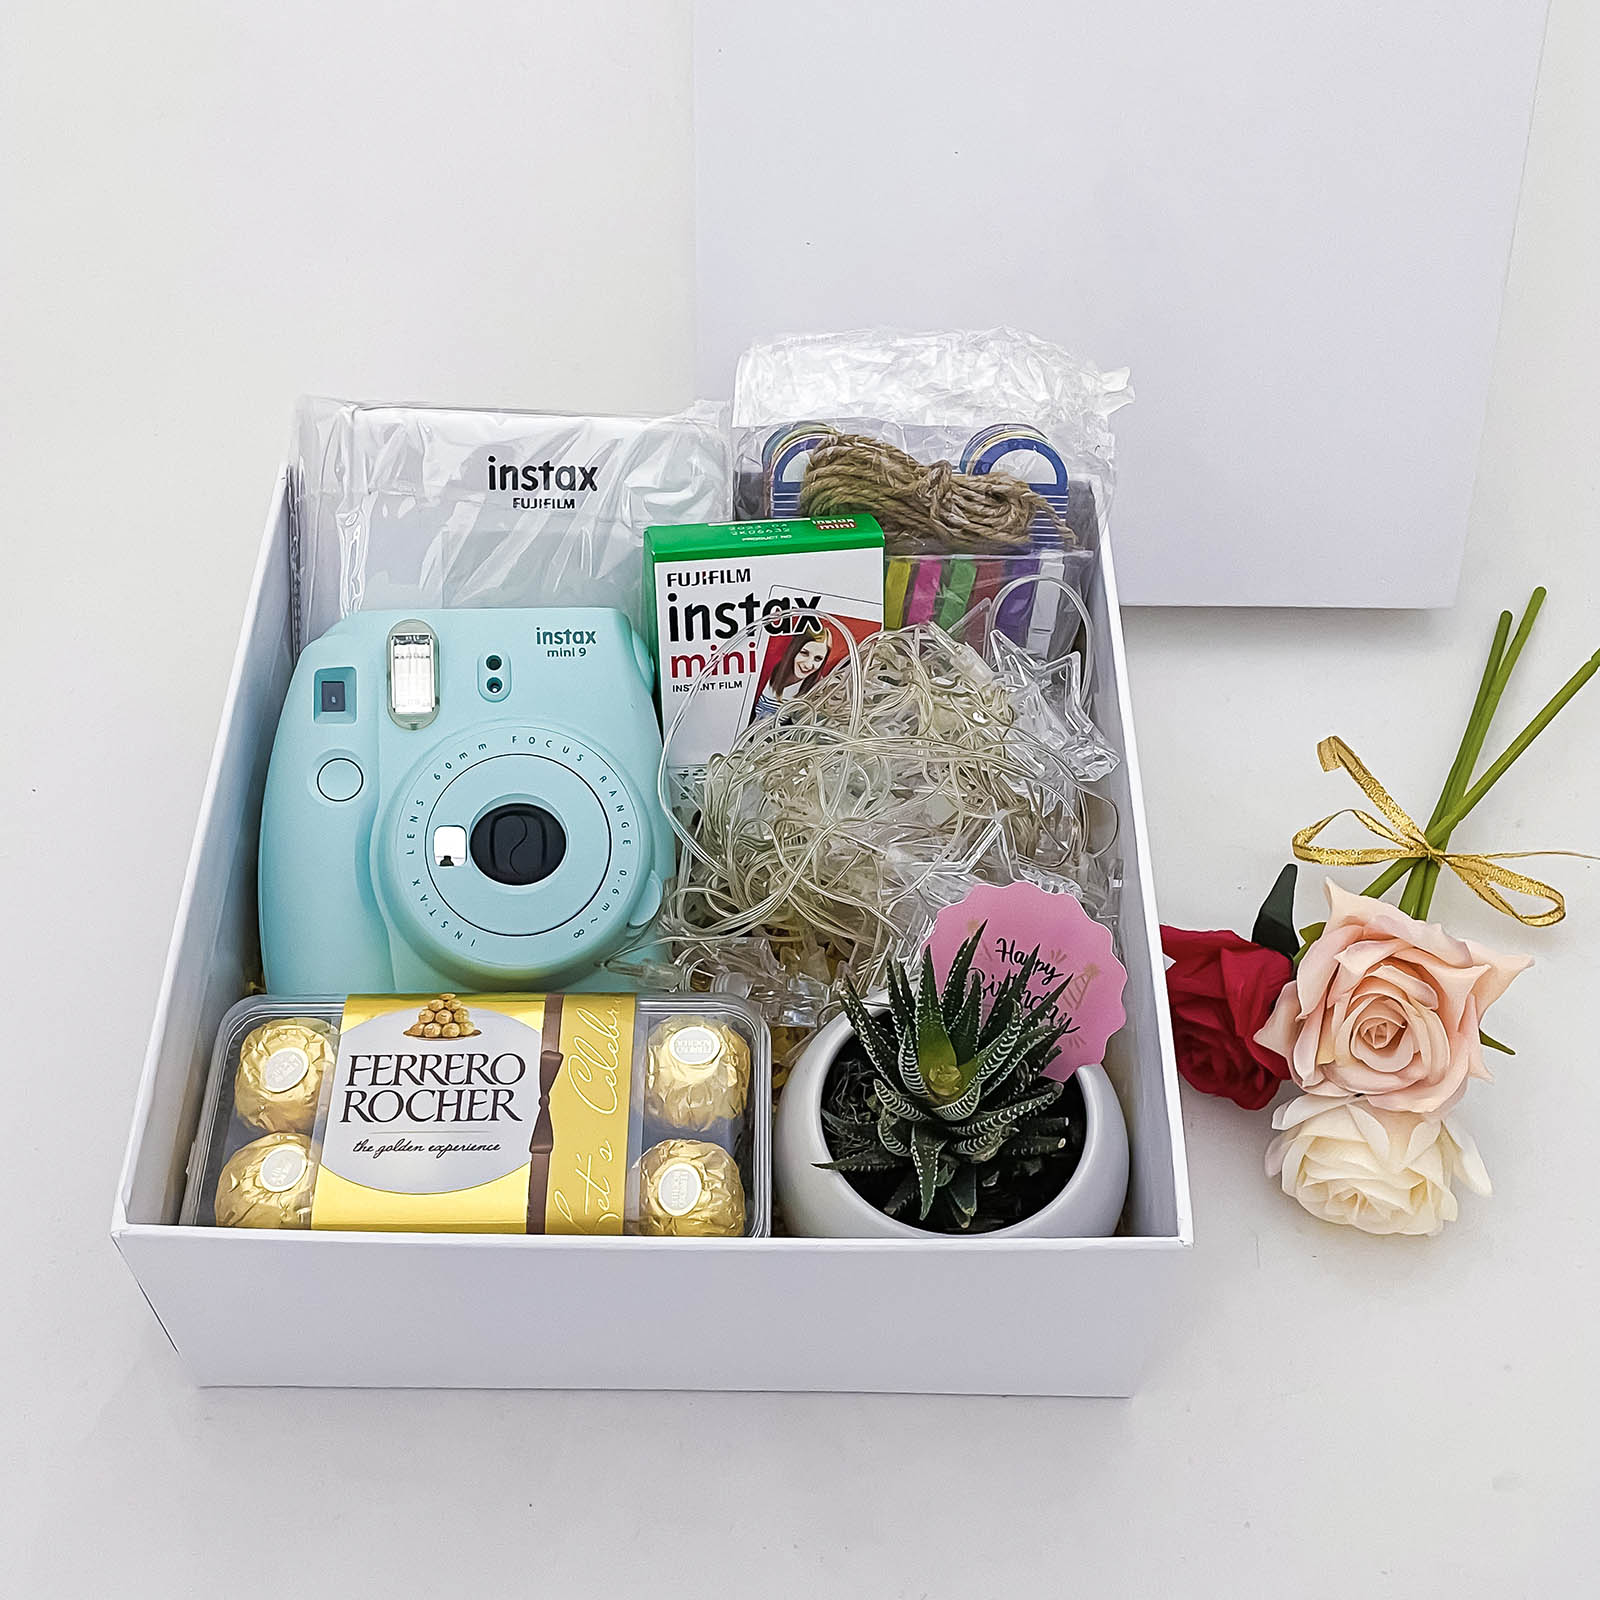 32 Cute Birthday Gift Ideas For Boyfriend - Personal House